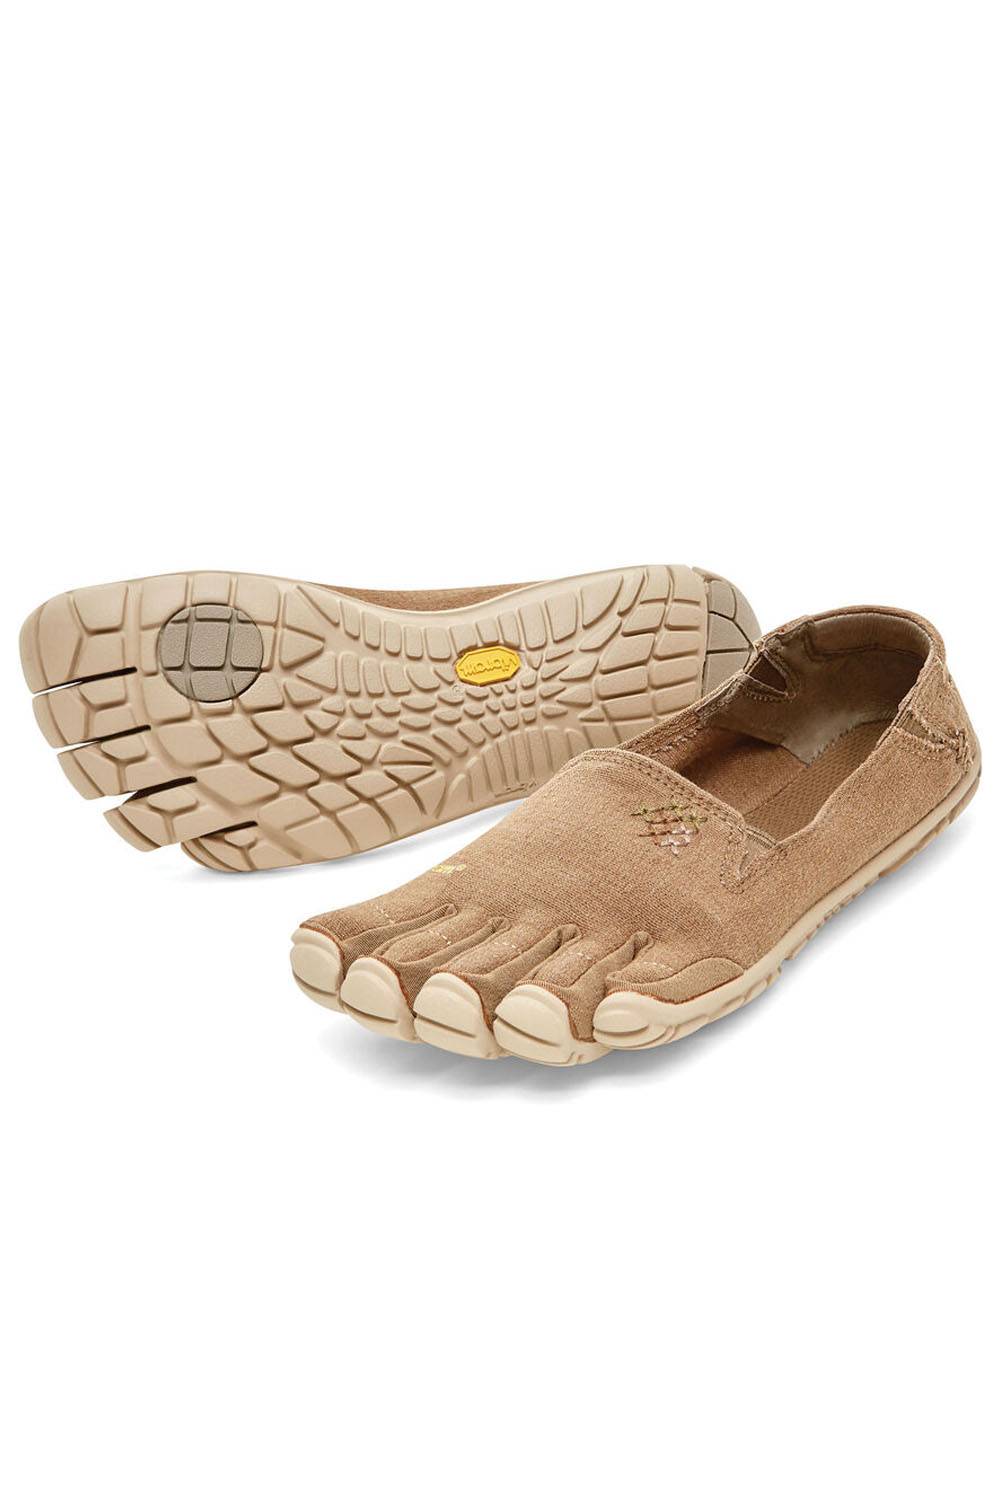 vibram minimalist barefoot shoes